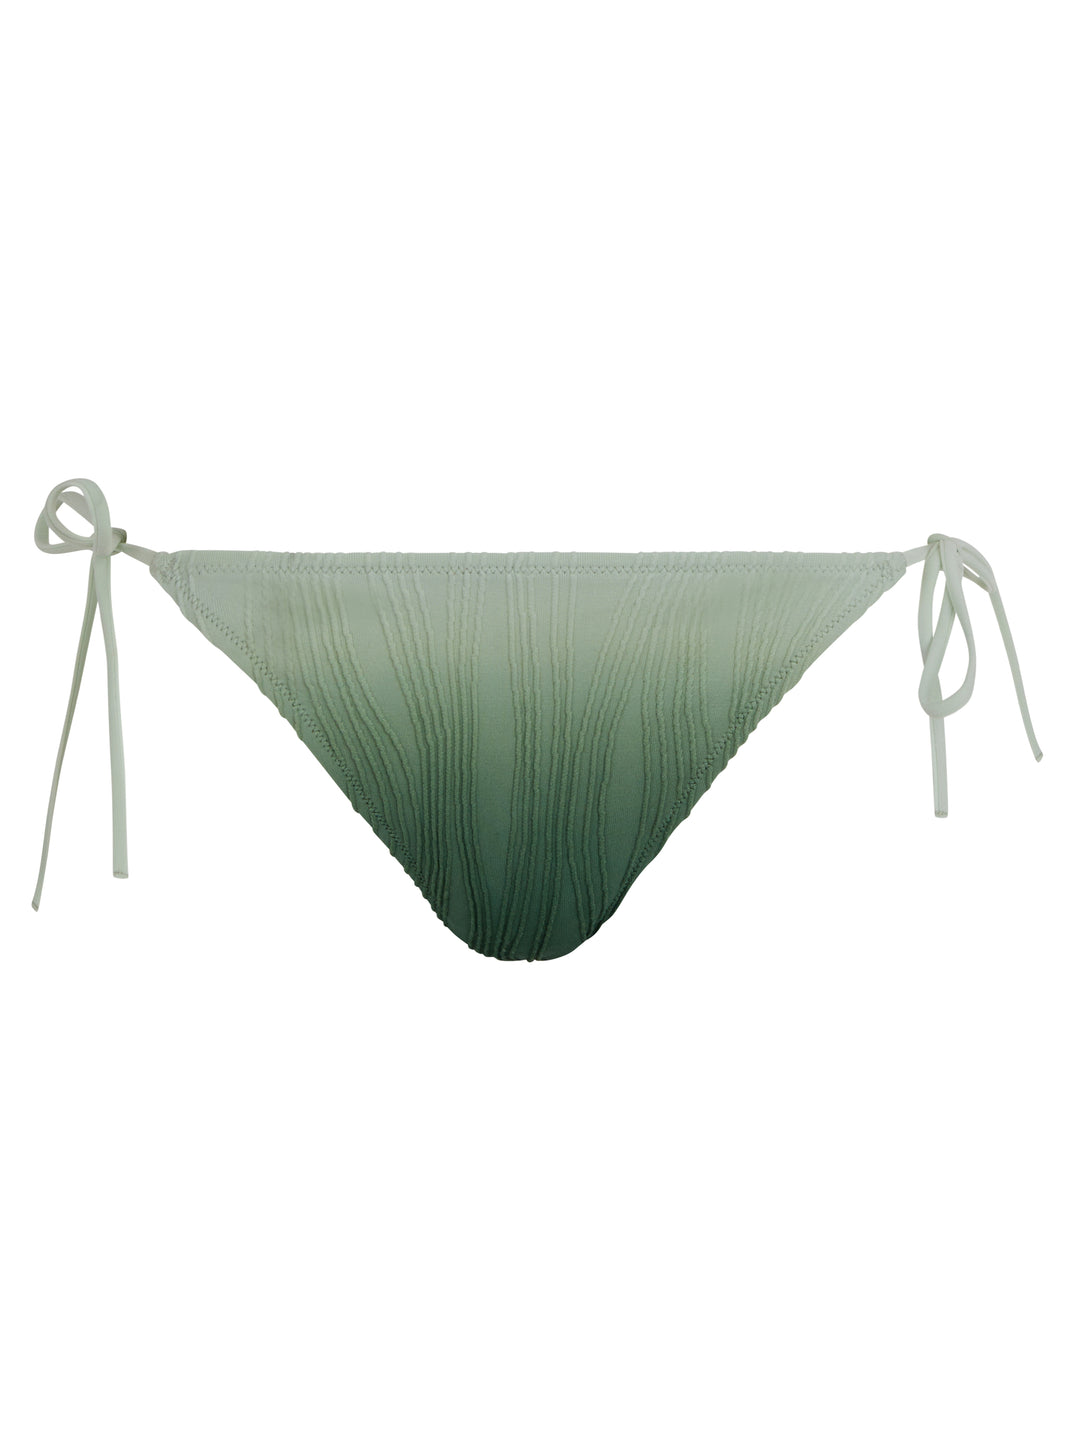 Chantelle Swimwear - Swim One Size Bikini Green tie & dye